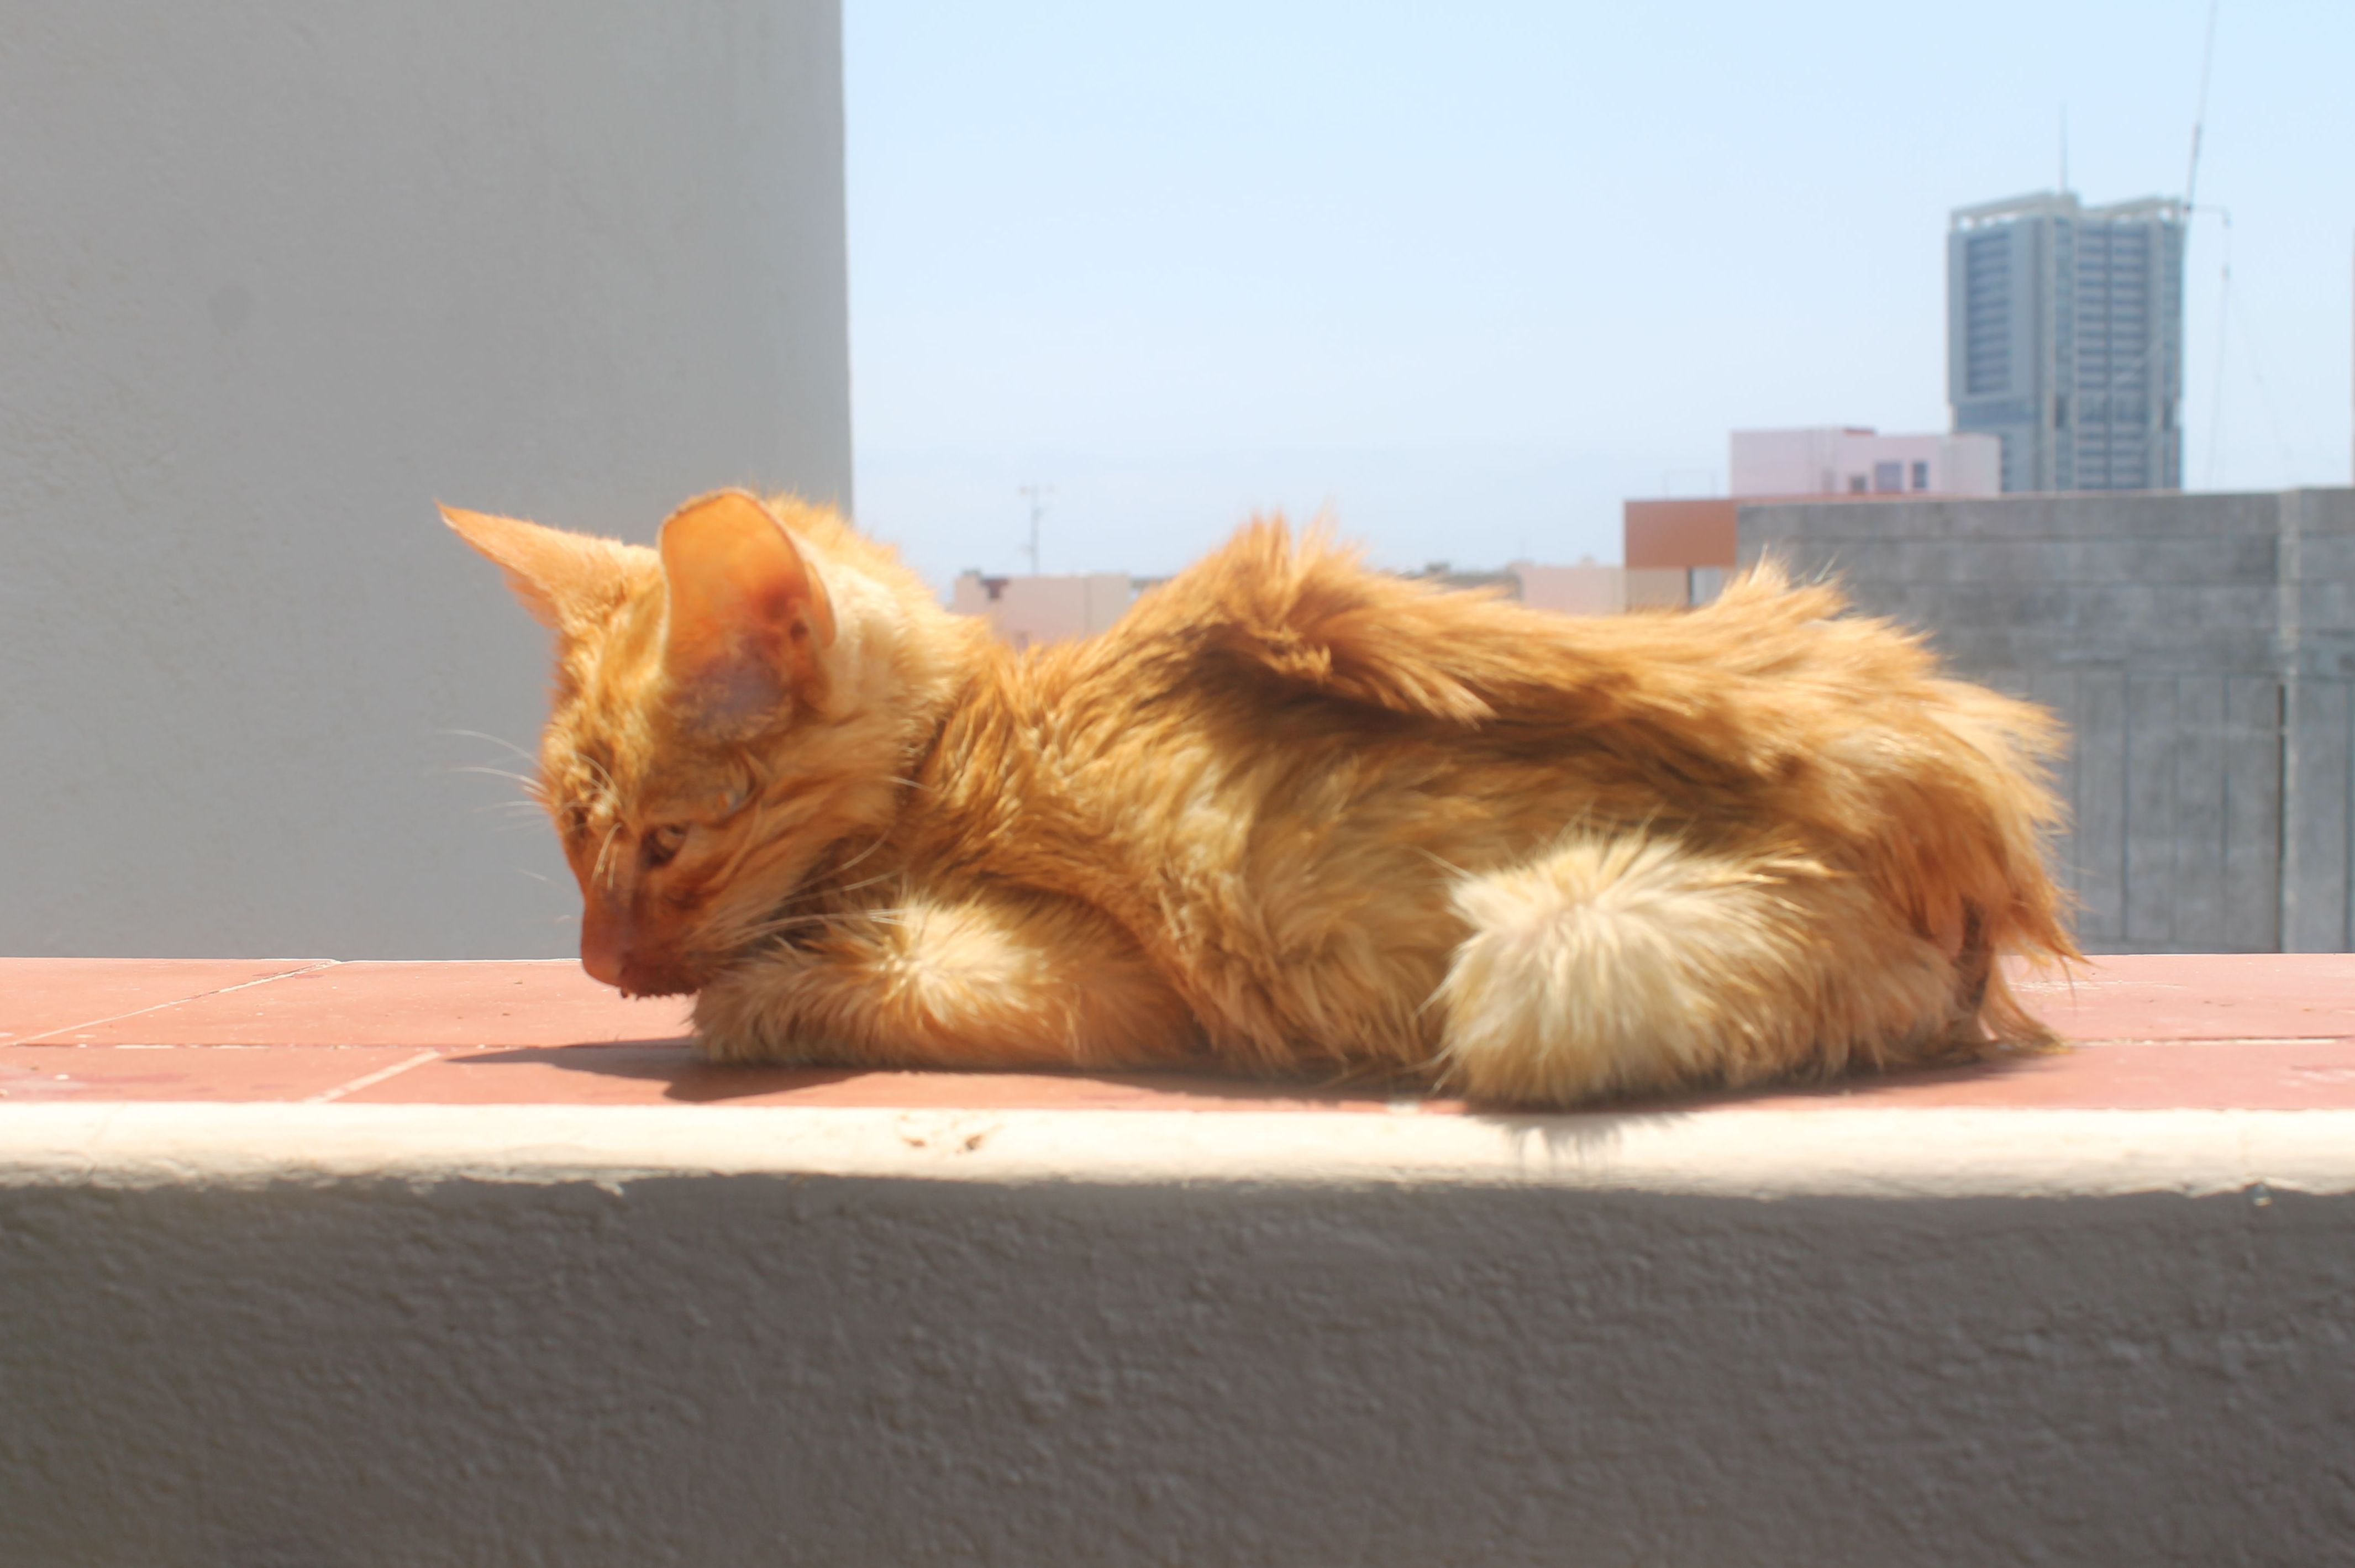 Consulta de medicina interna para mascotas en Tenerife